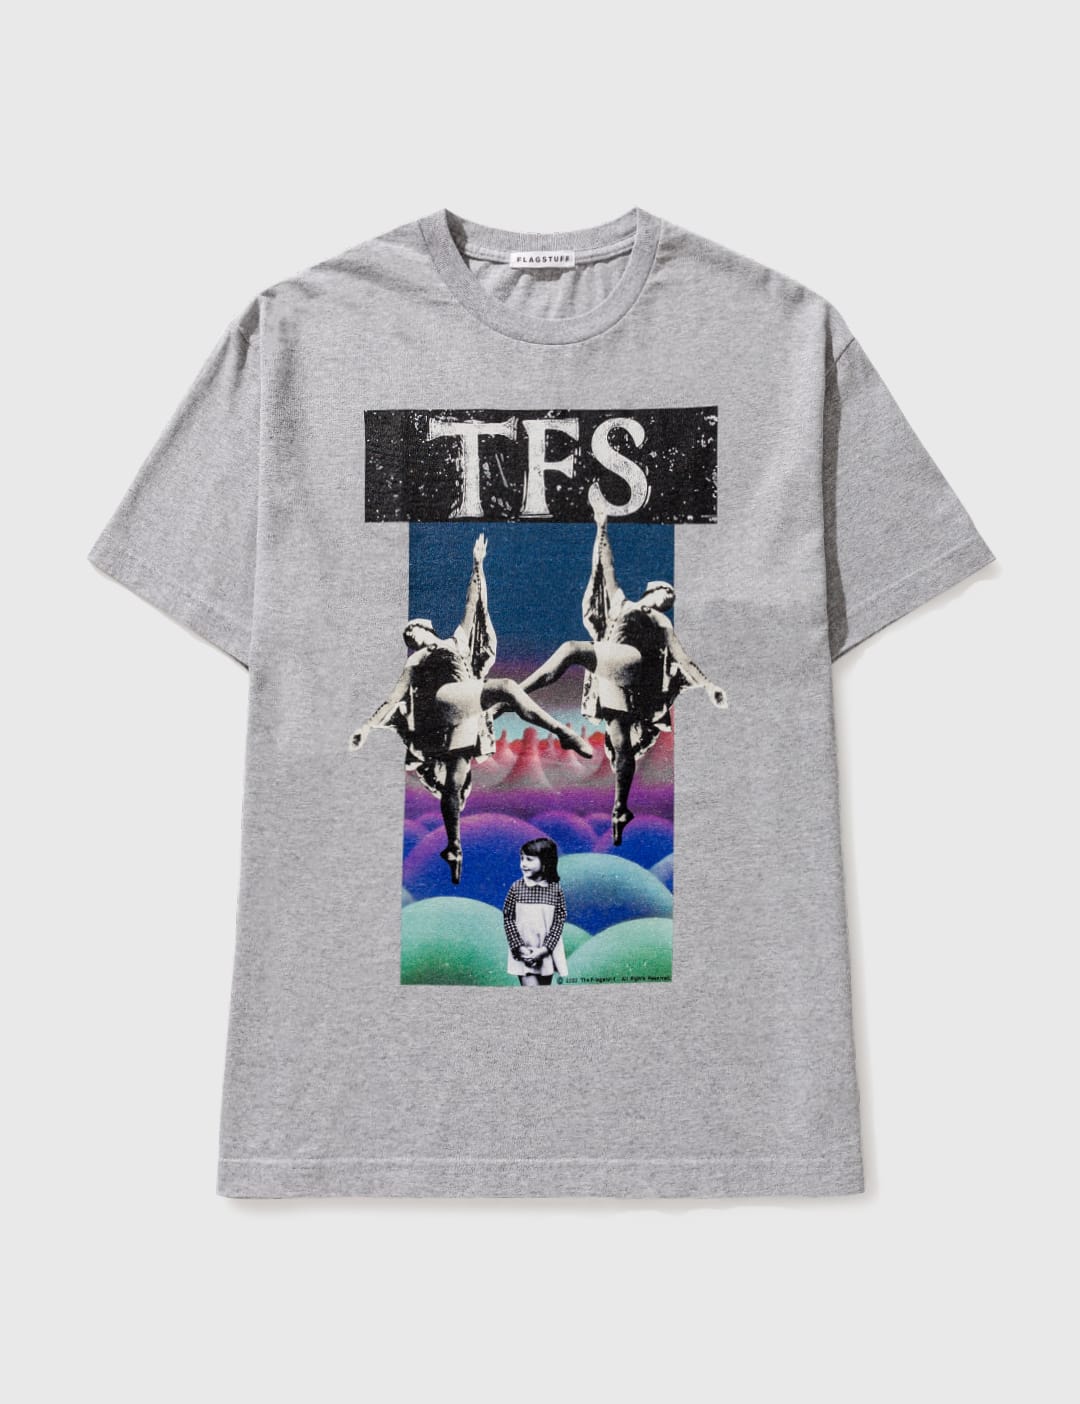 Flagstuff TFS T-shirt